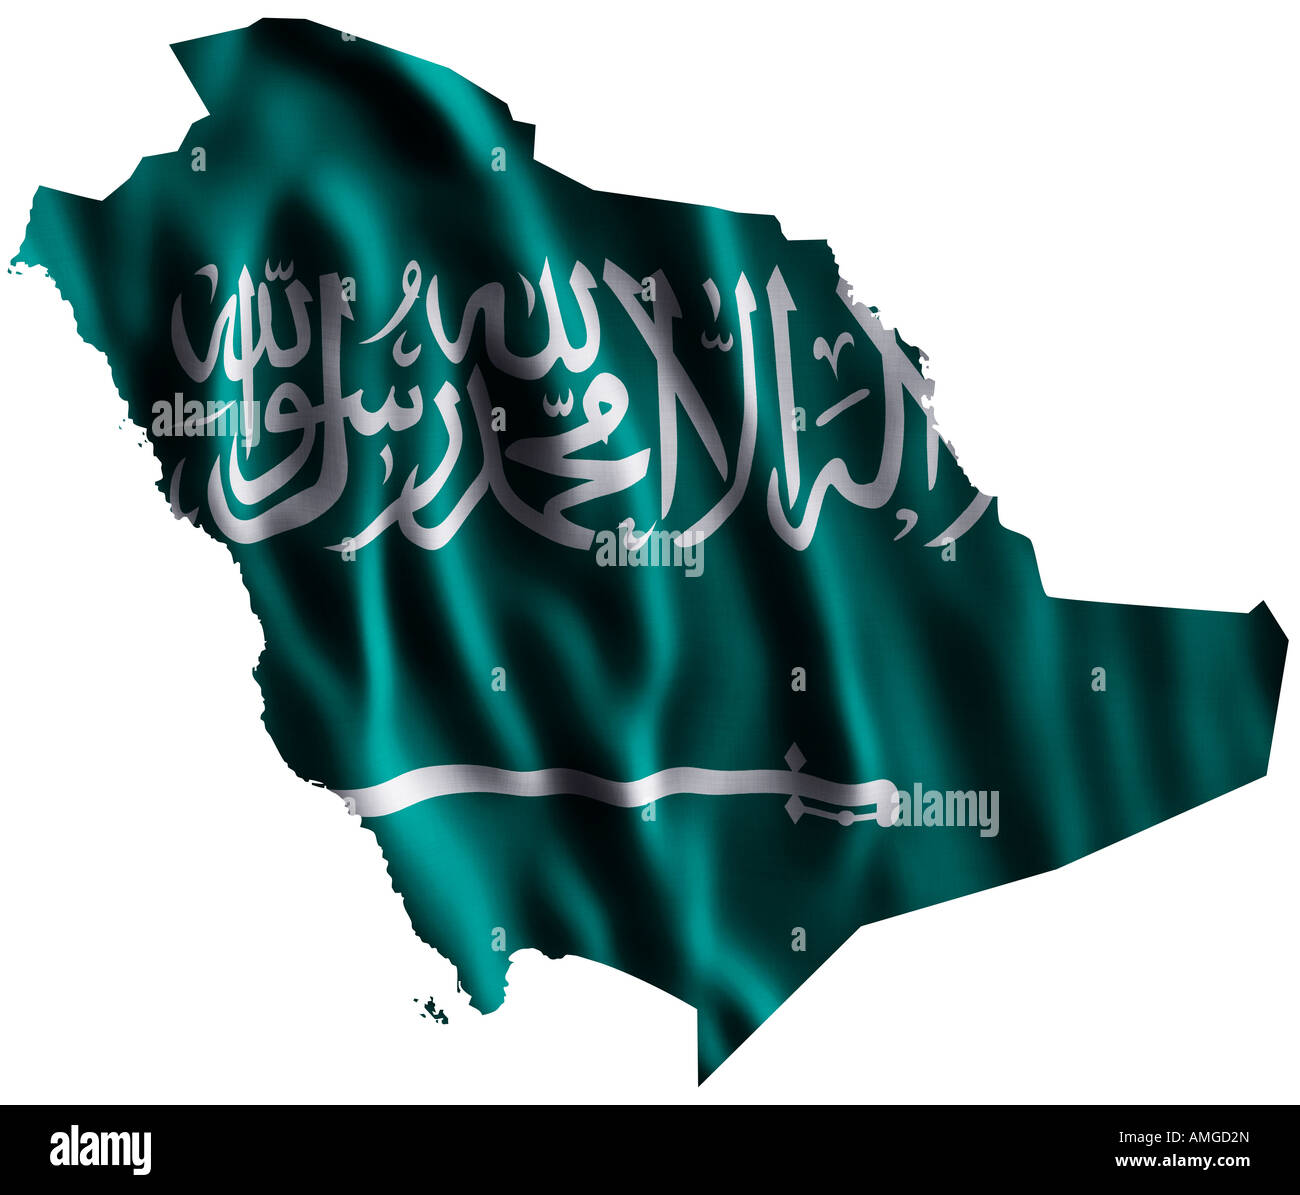 National flag of Saudi Arabia as a map Stock Photo